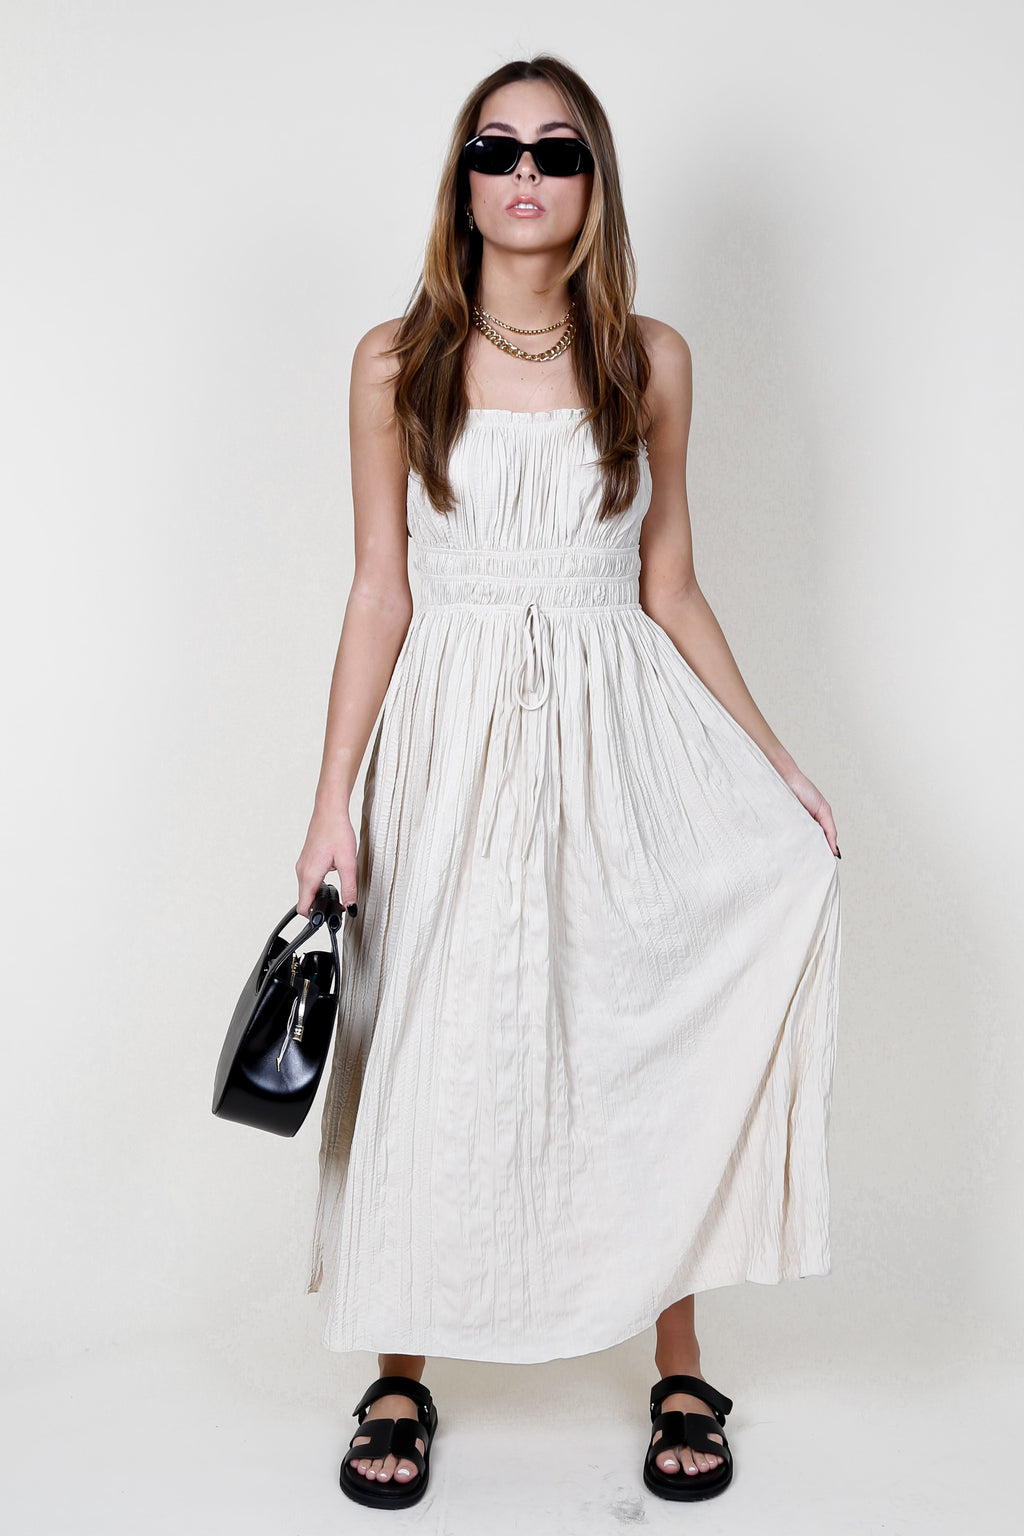 LUCY PARIS | Rosalie Smocked Dress - Beige